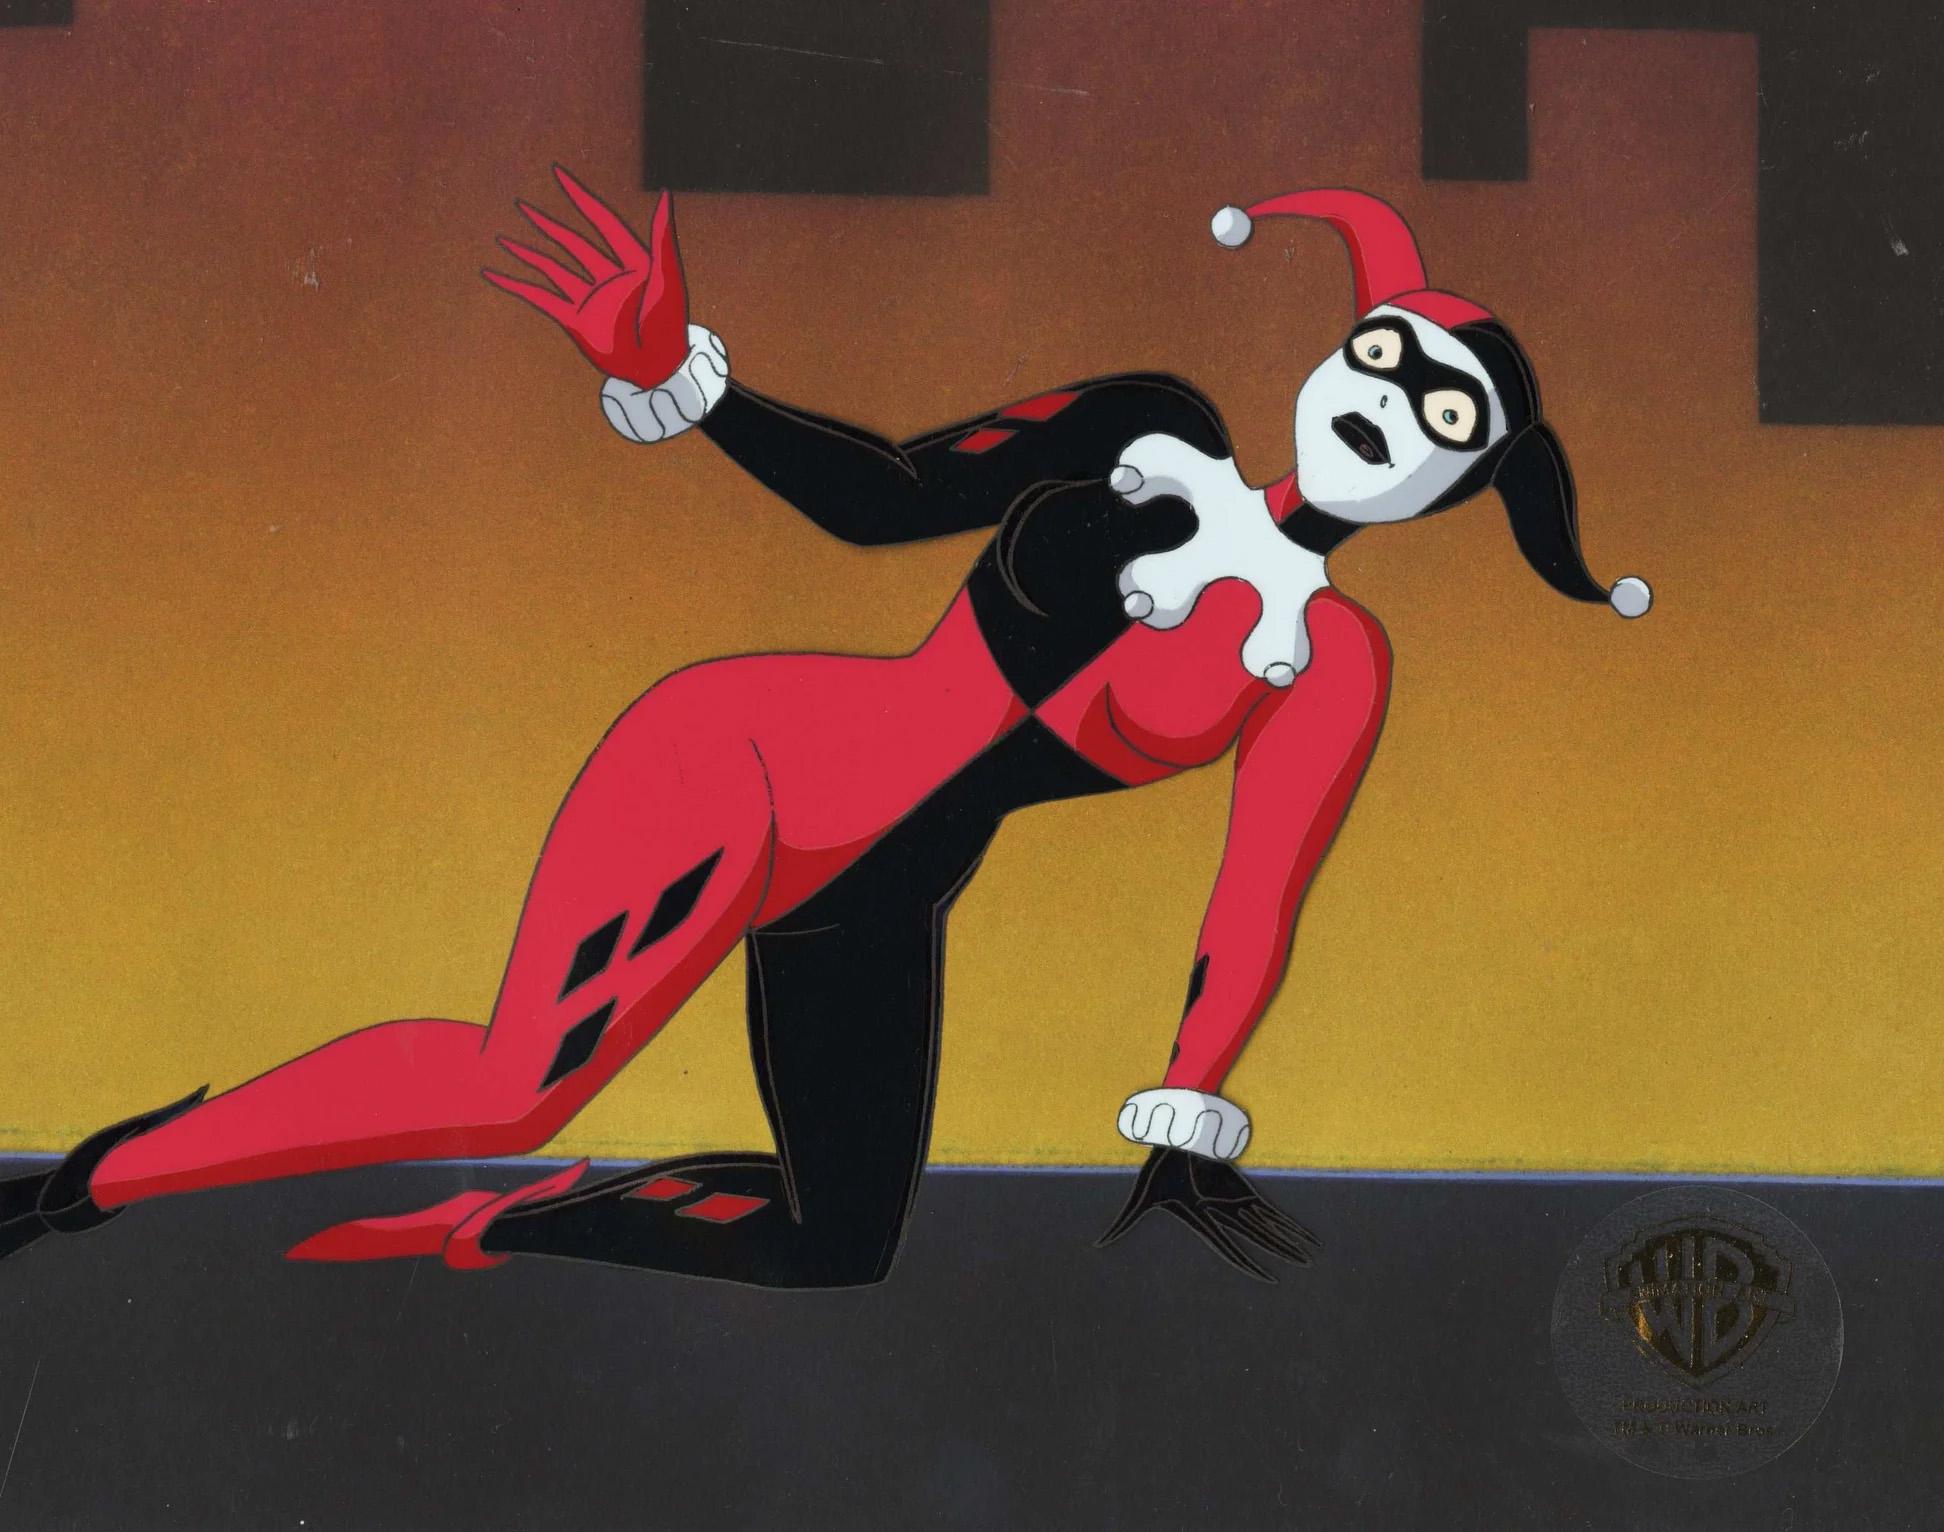 Batman The Animated Series Original Production Cel: Harley Quinn - Art by DC Comics Studio Artists